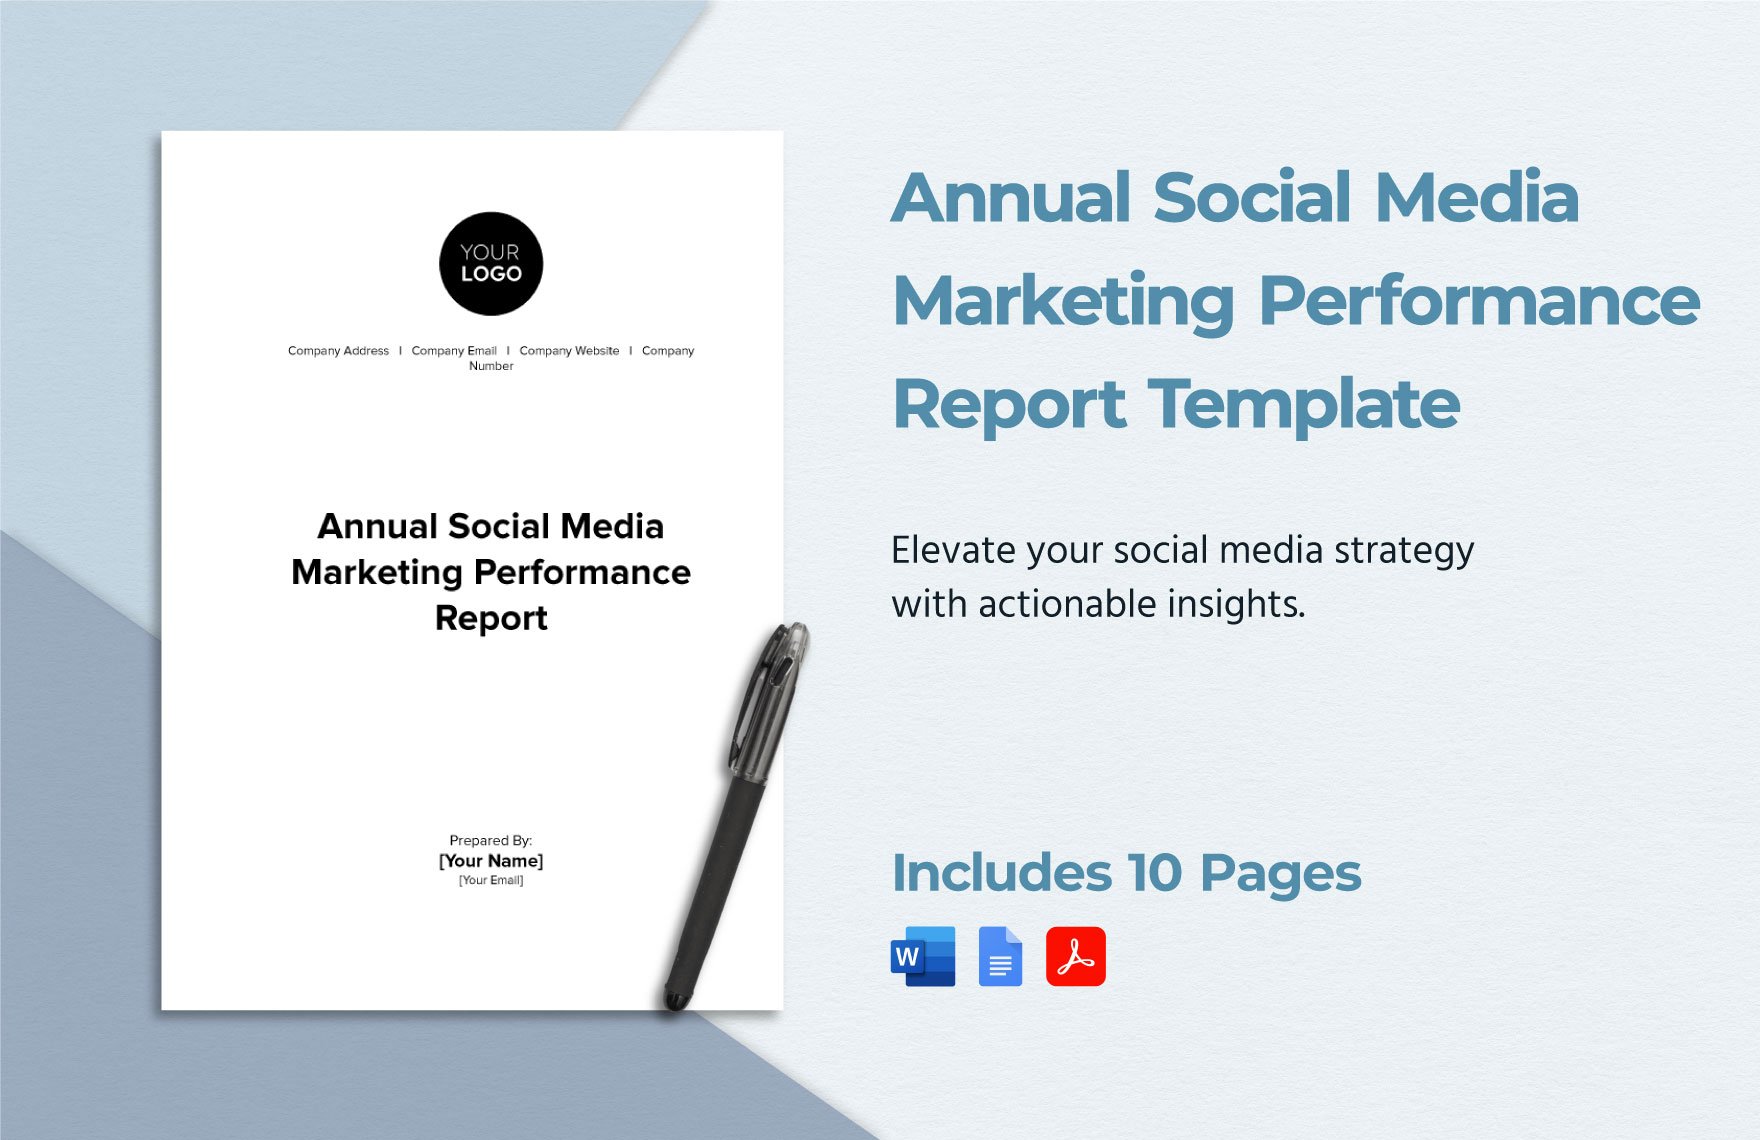 Annual Social Media Marketing Performance Report Template